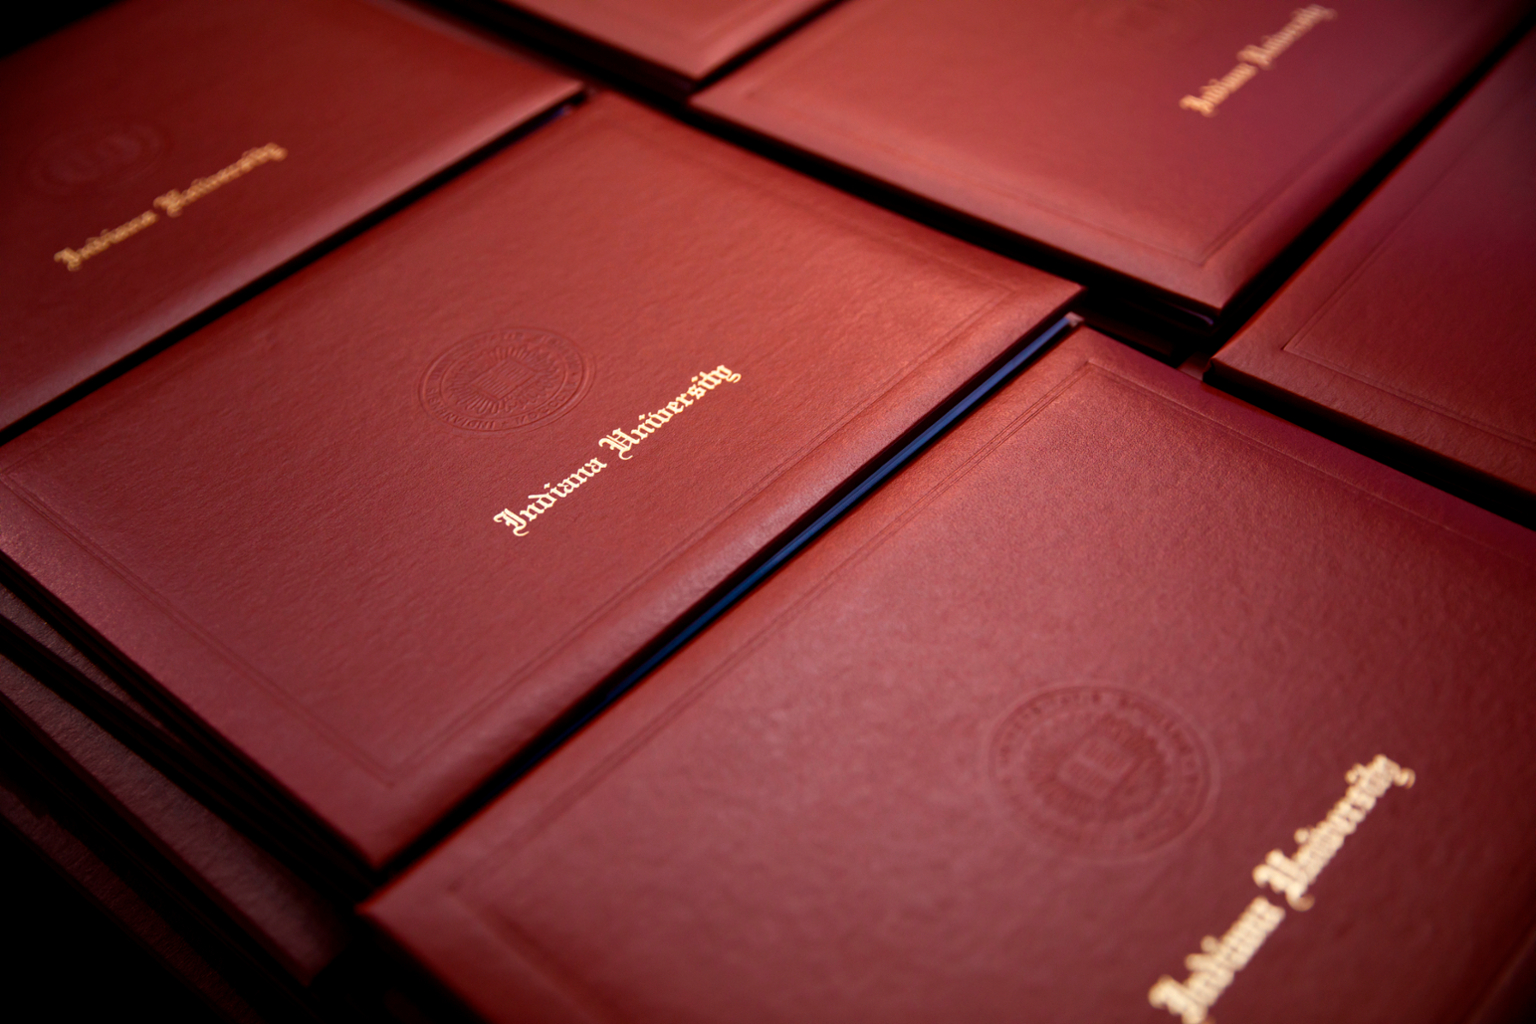 Indiana University diploma covers